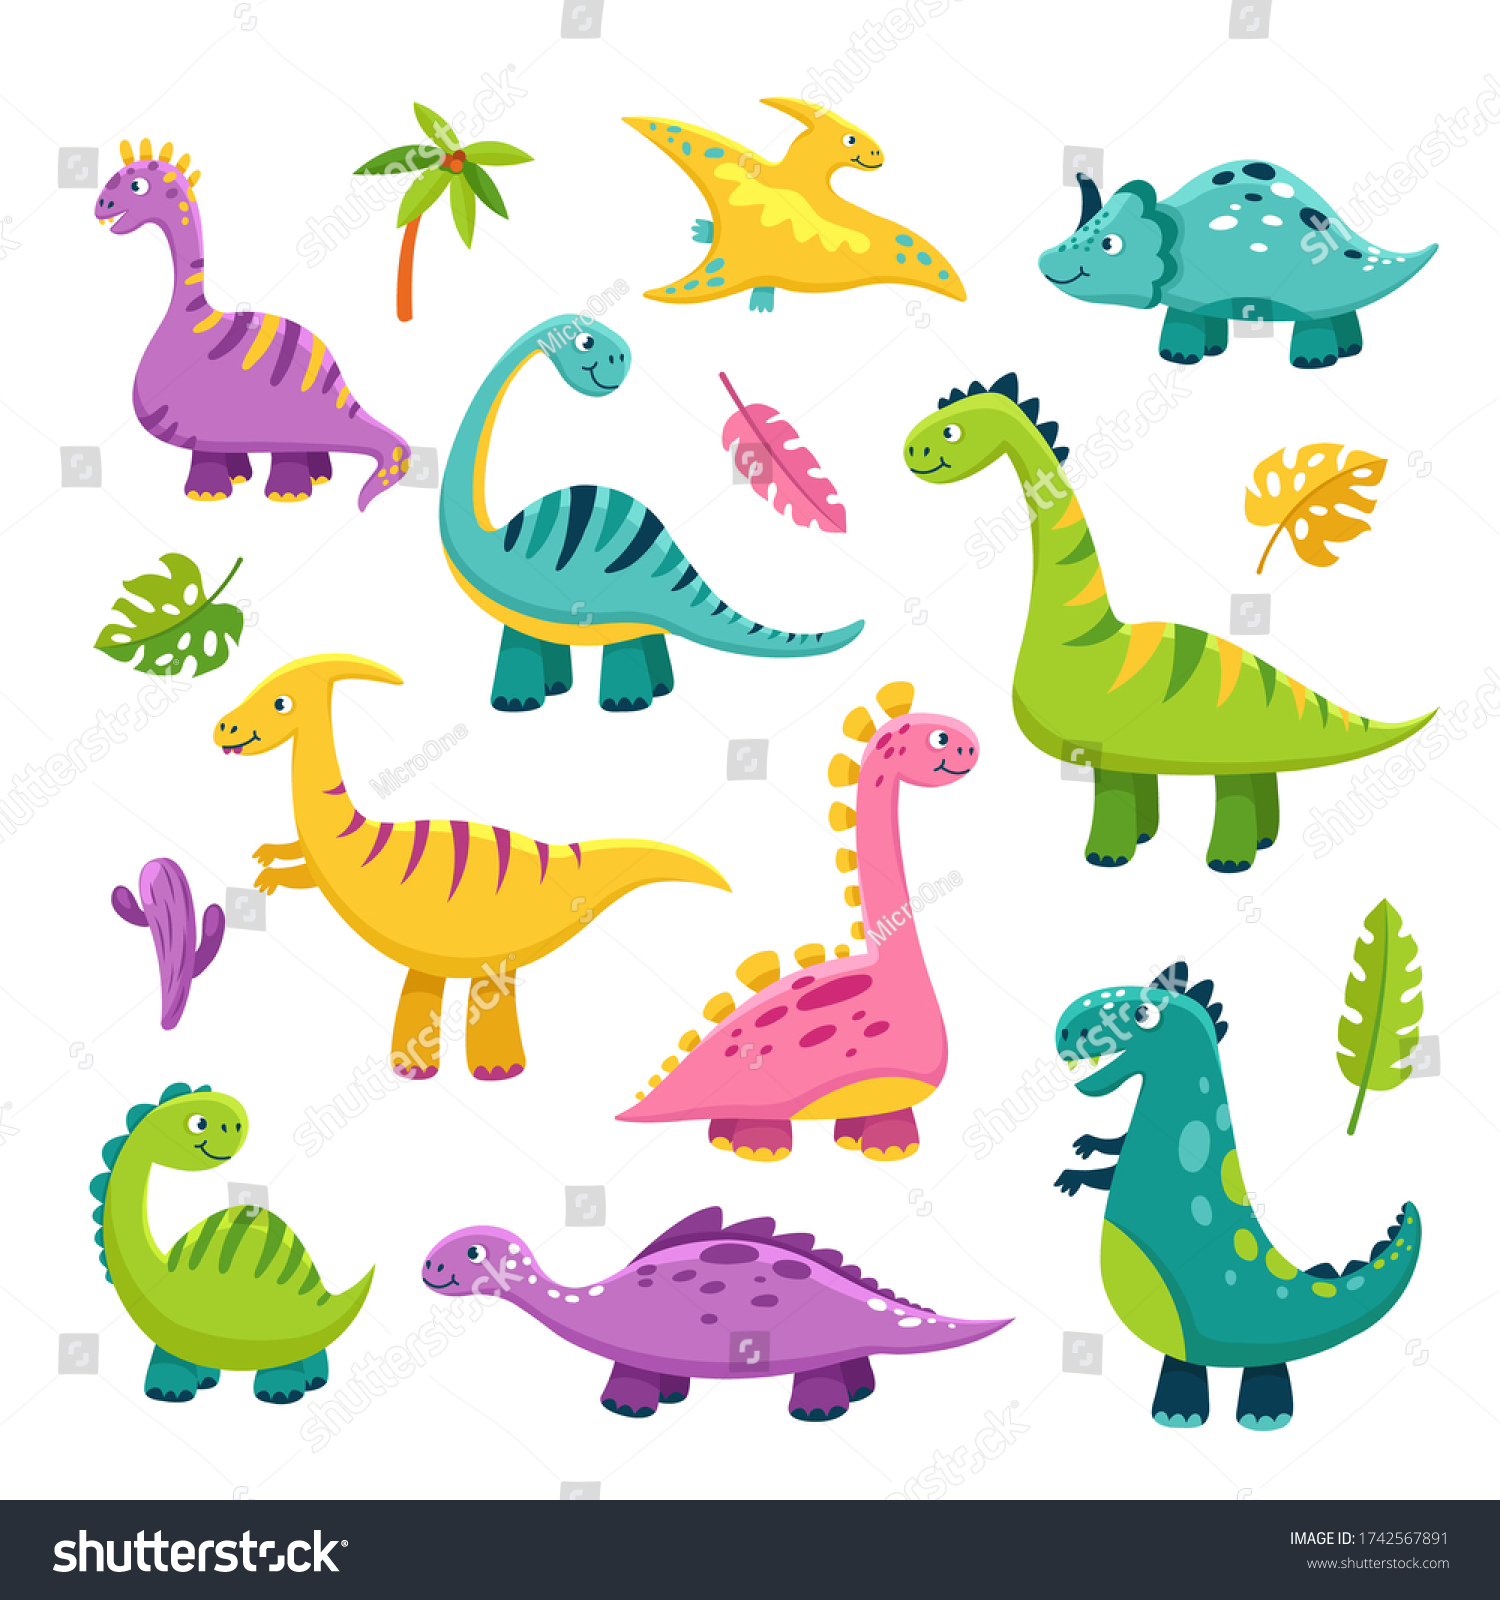 Cute Dino Cartoon Baby Dinosaur Stegosaurus Stock Illustration ...